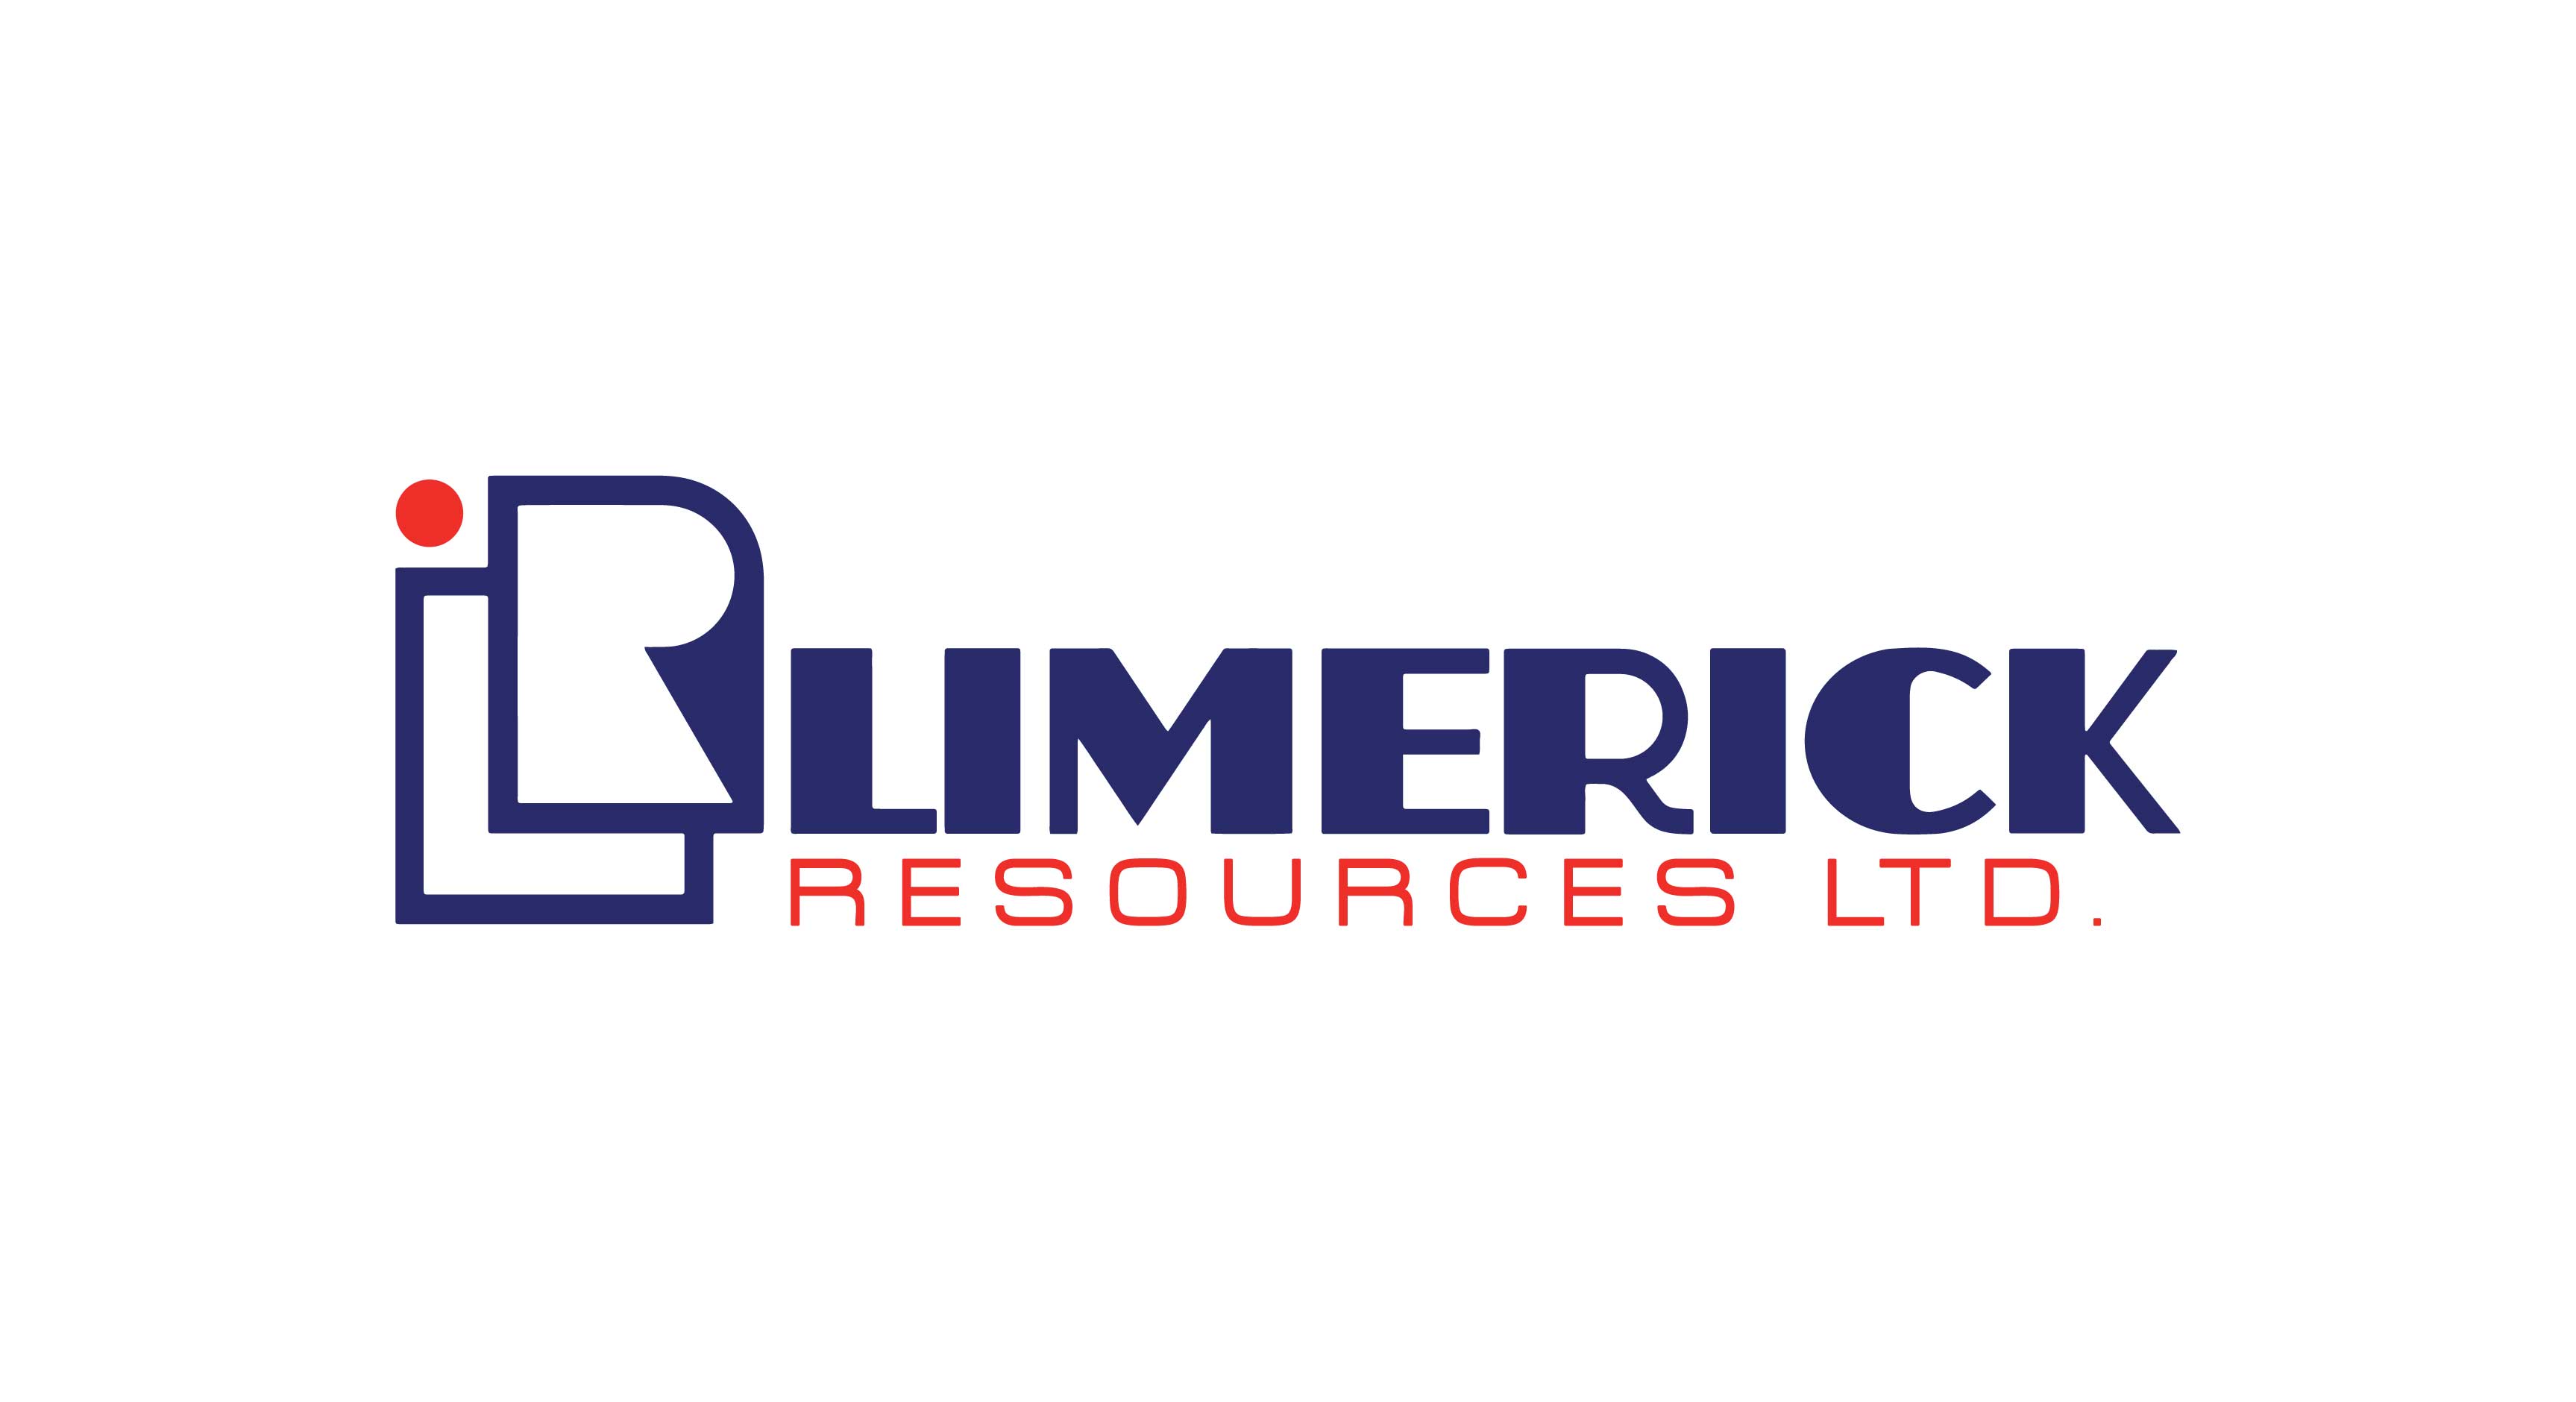 Limerick Resources Ltd.